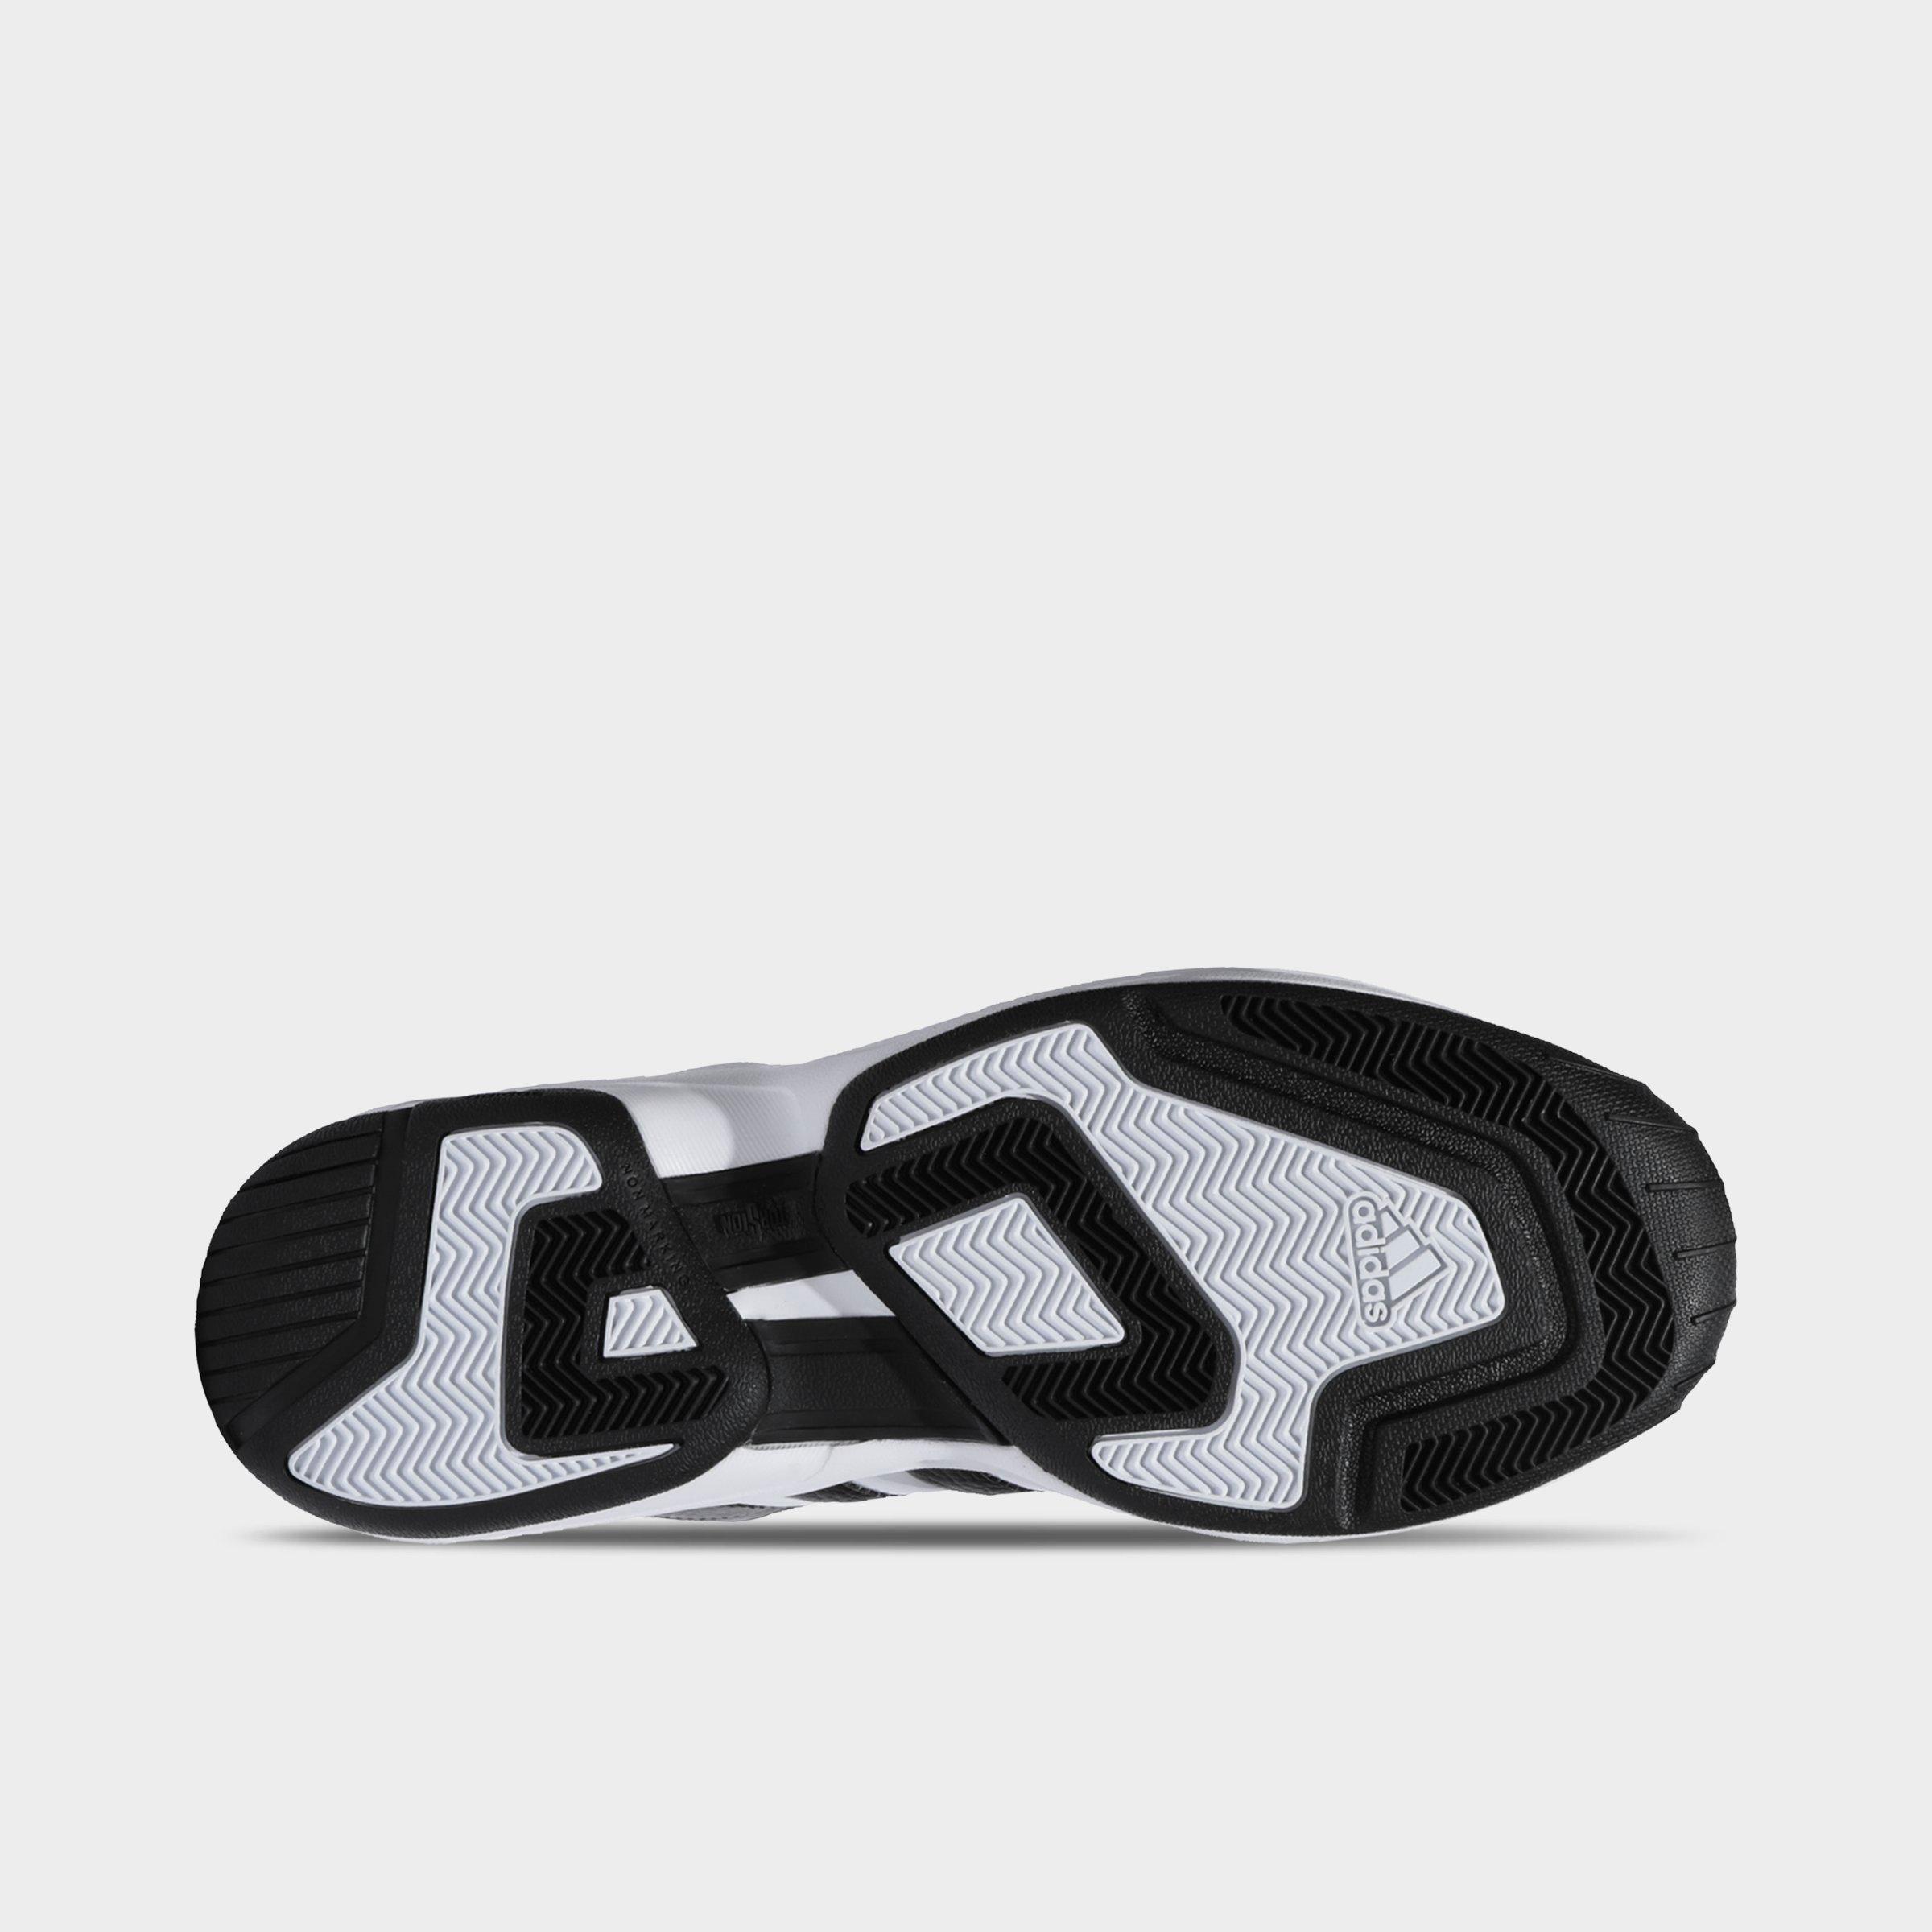 adidas 2g basketball shoes